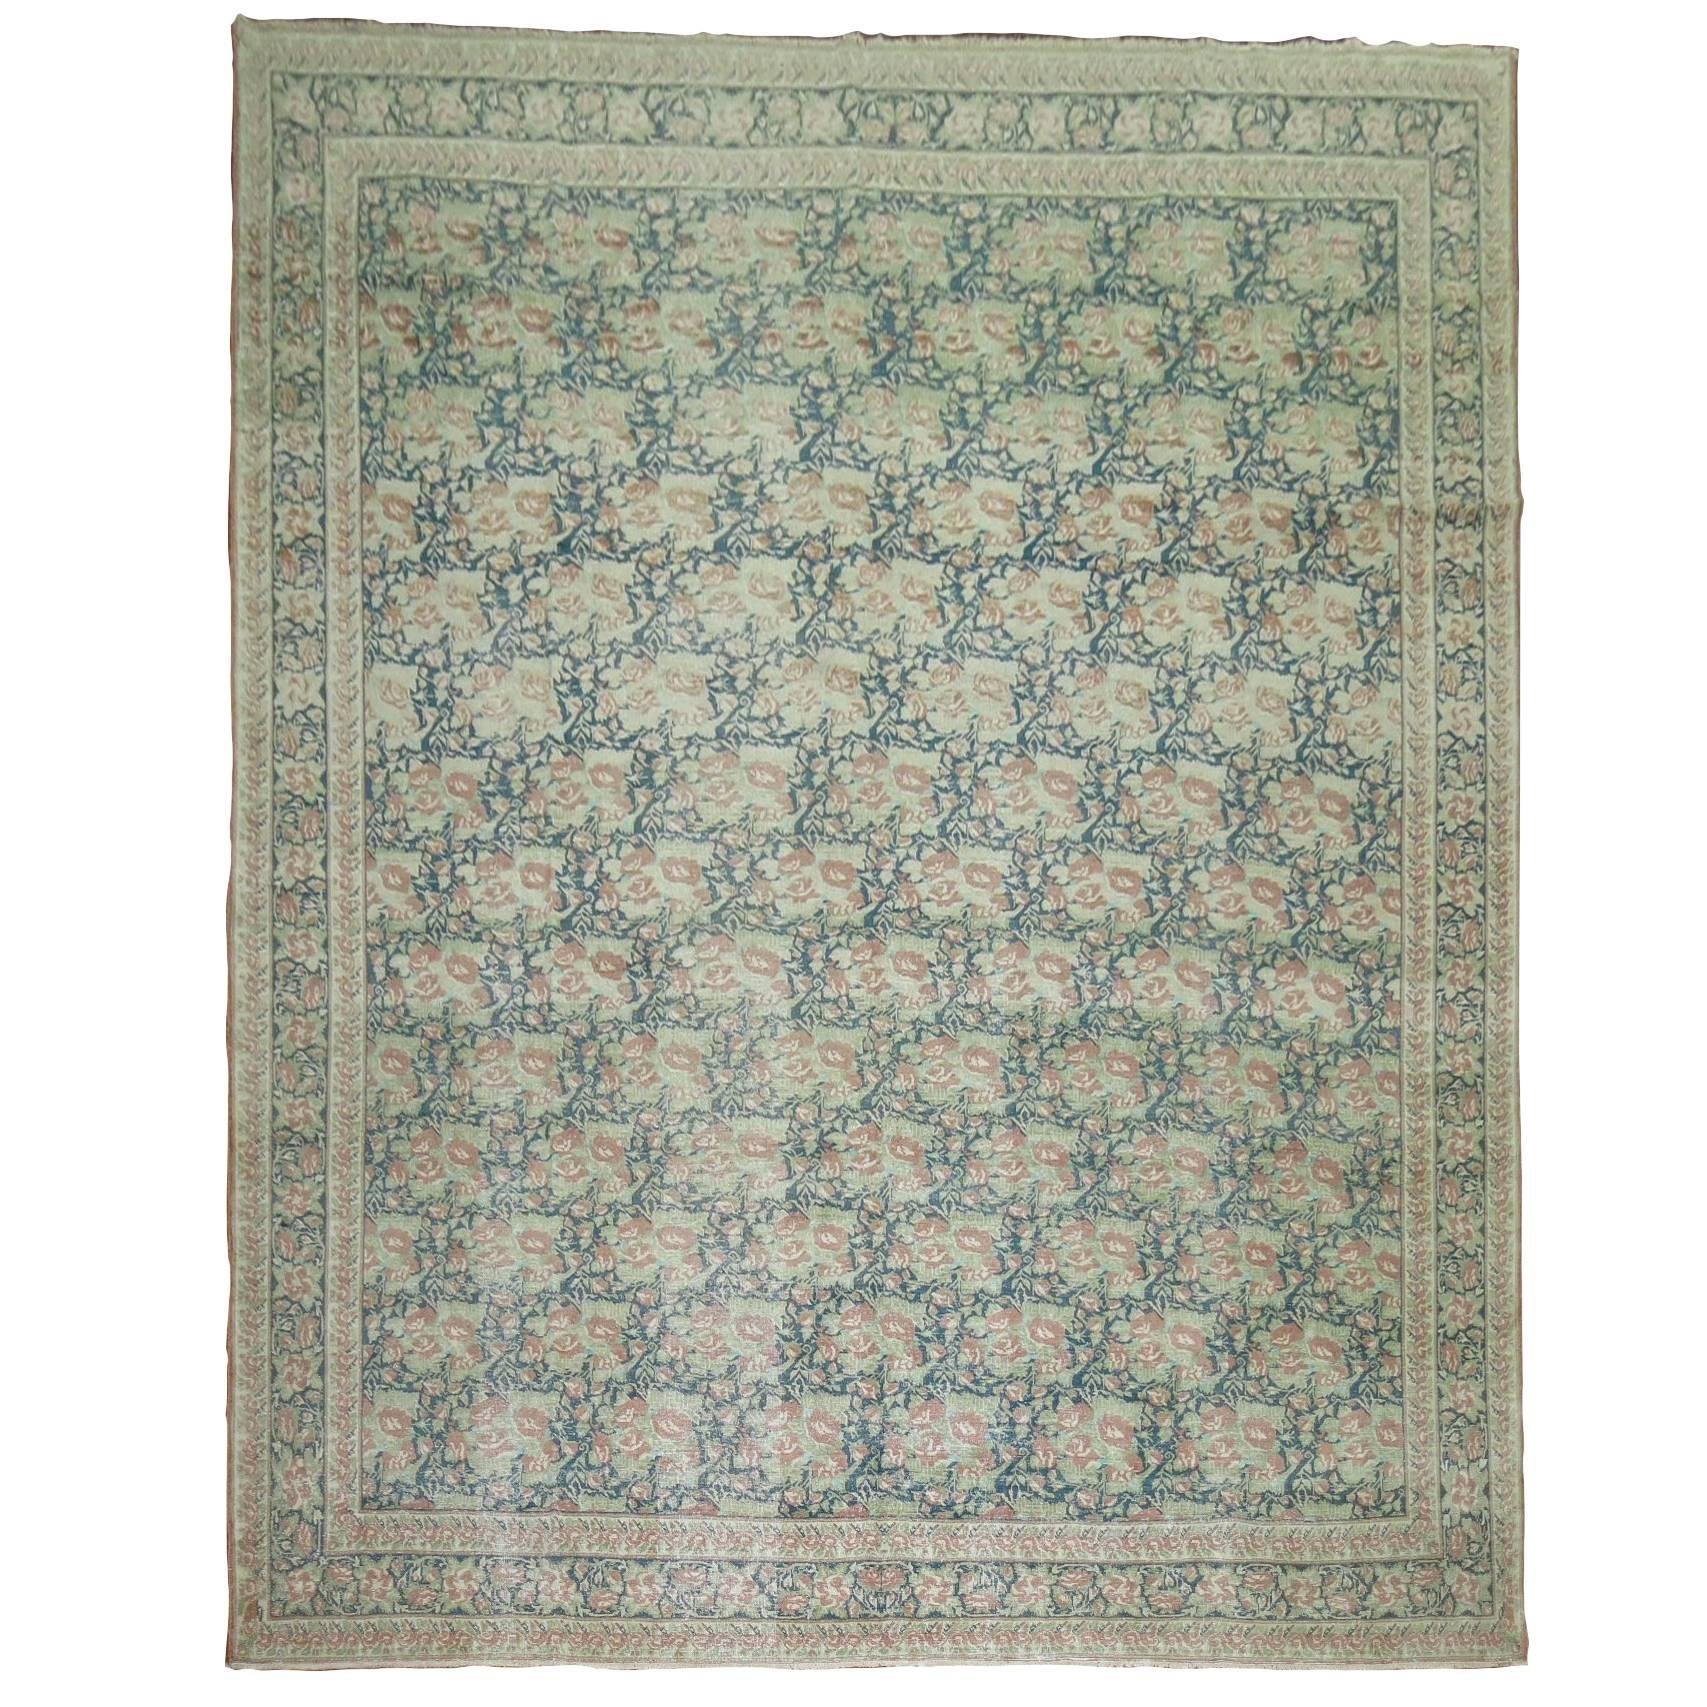 Vintage European Carpet For Sale